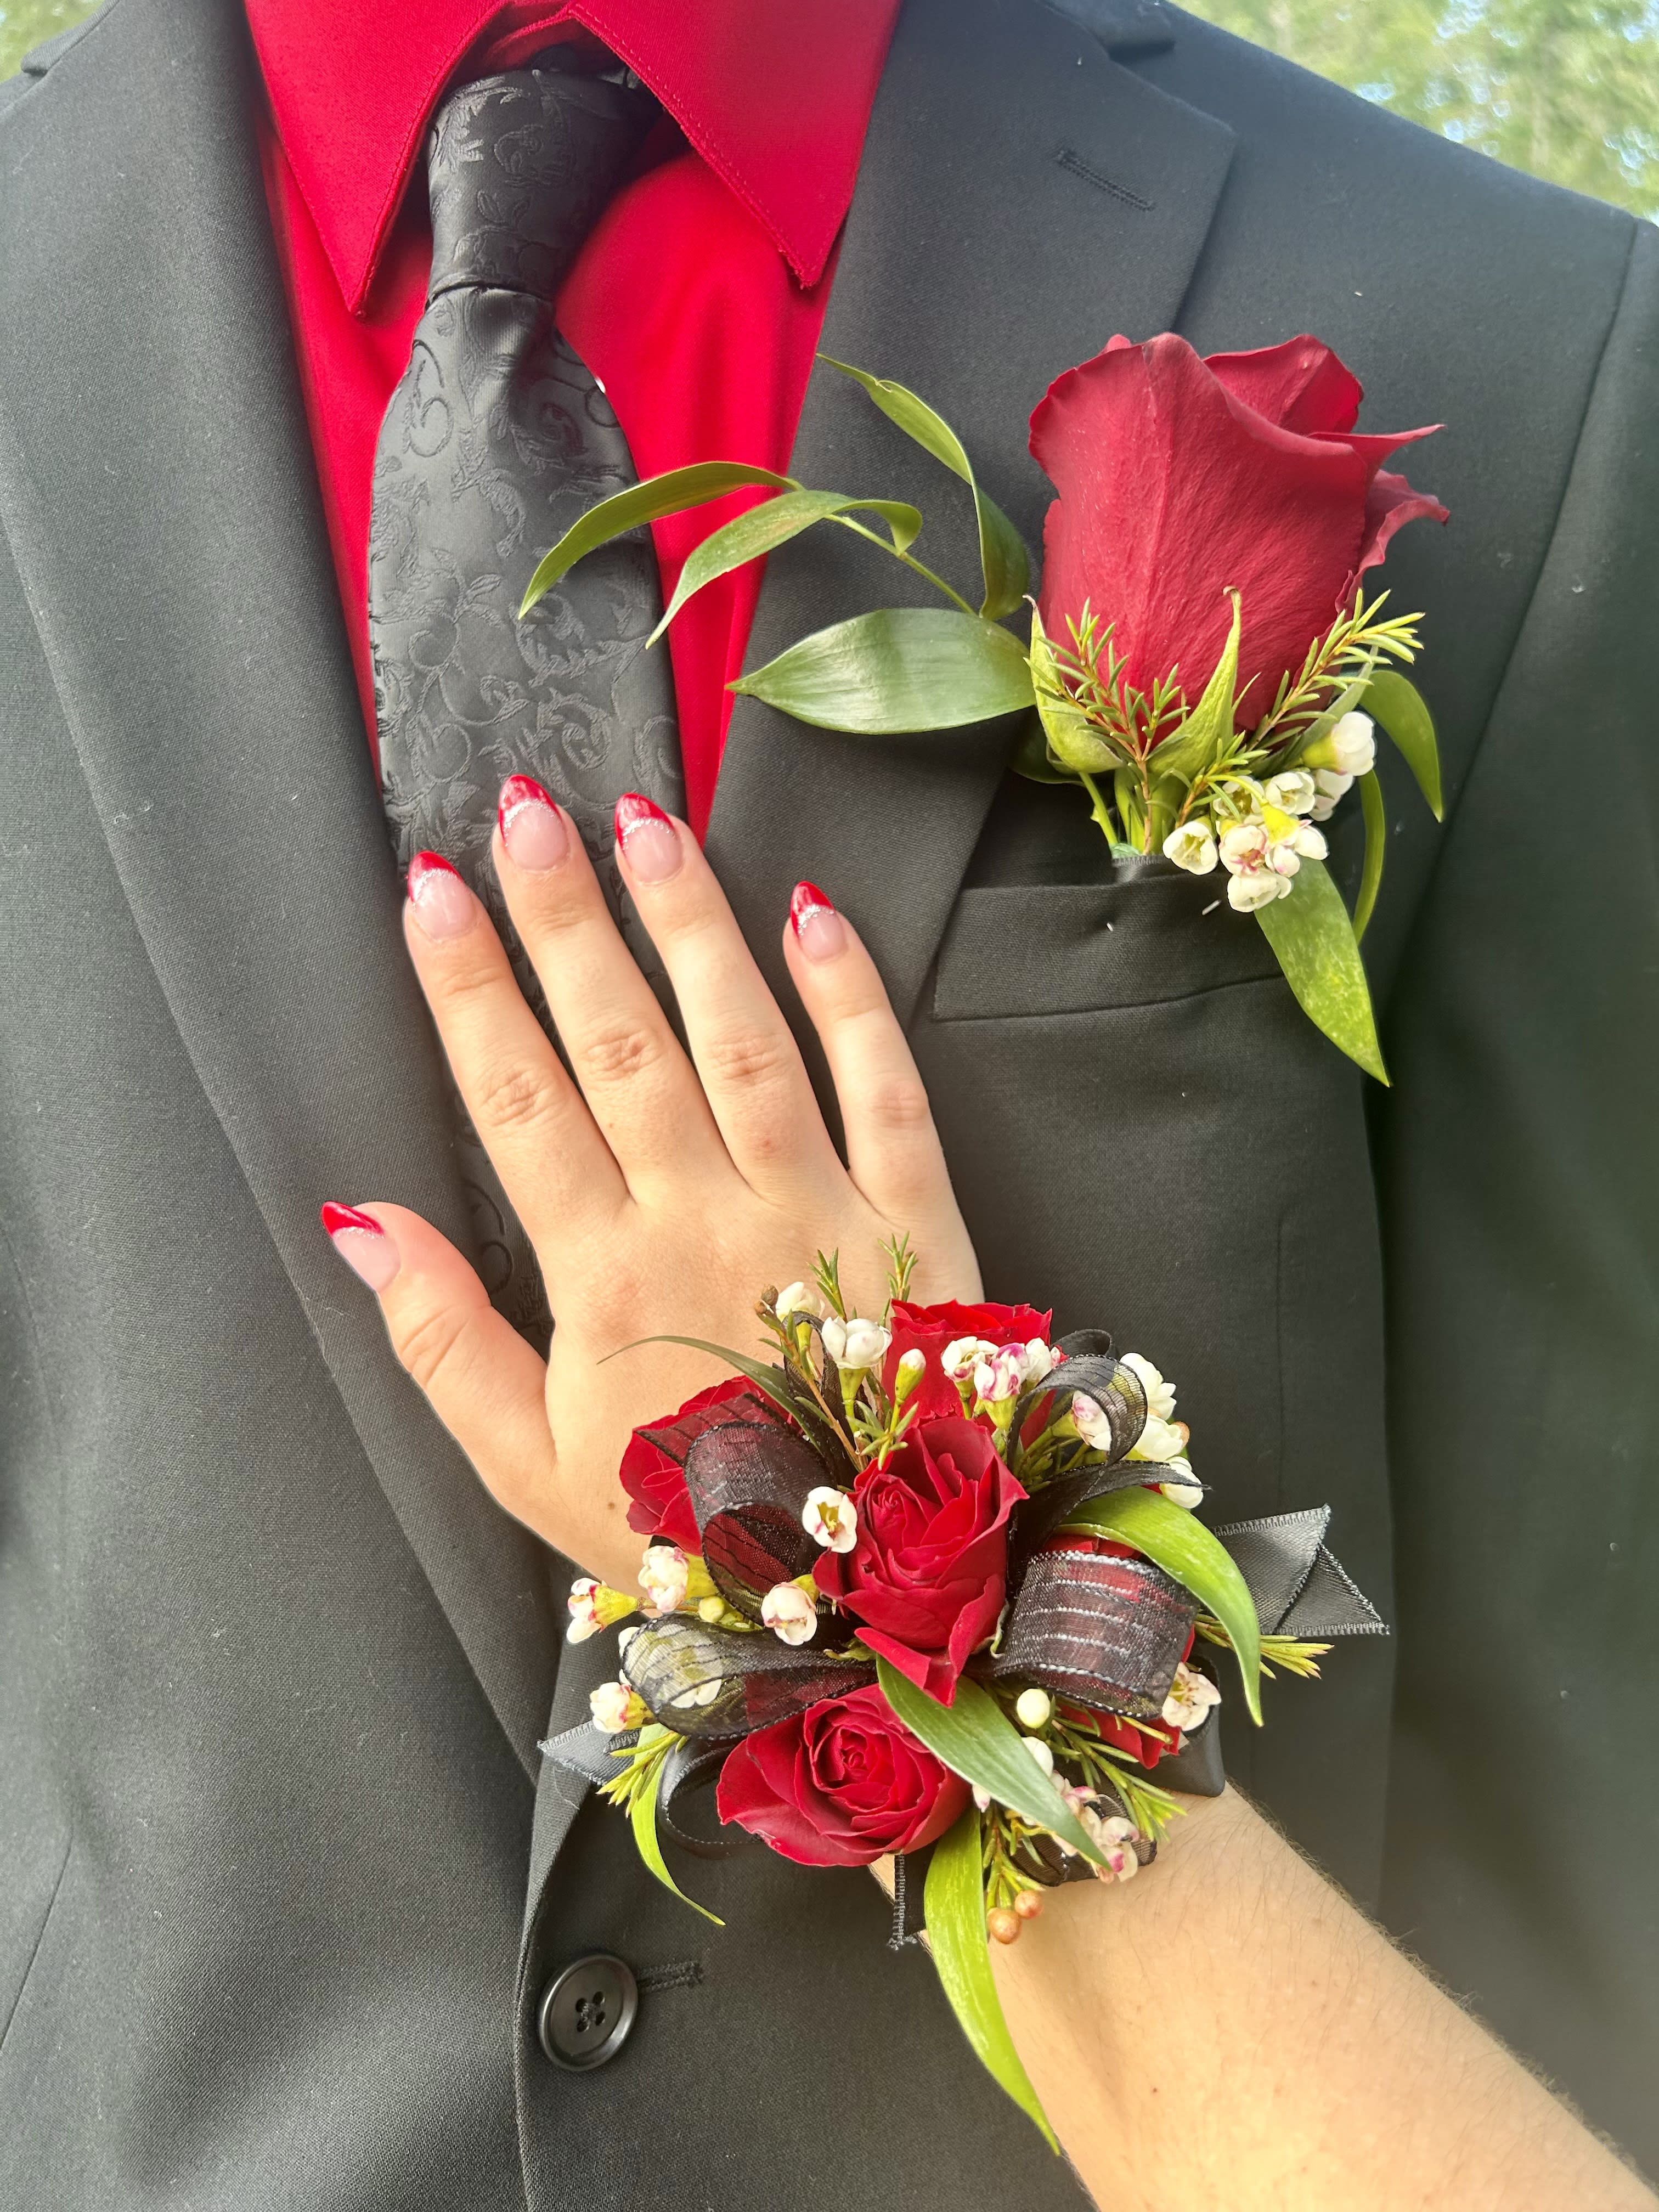 Ivory Rose Wrist Corsage Wrist Strap Bracelet And Men's Boutonniere Set  White Wedding Flower Accessories Prom Decoration